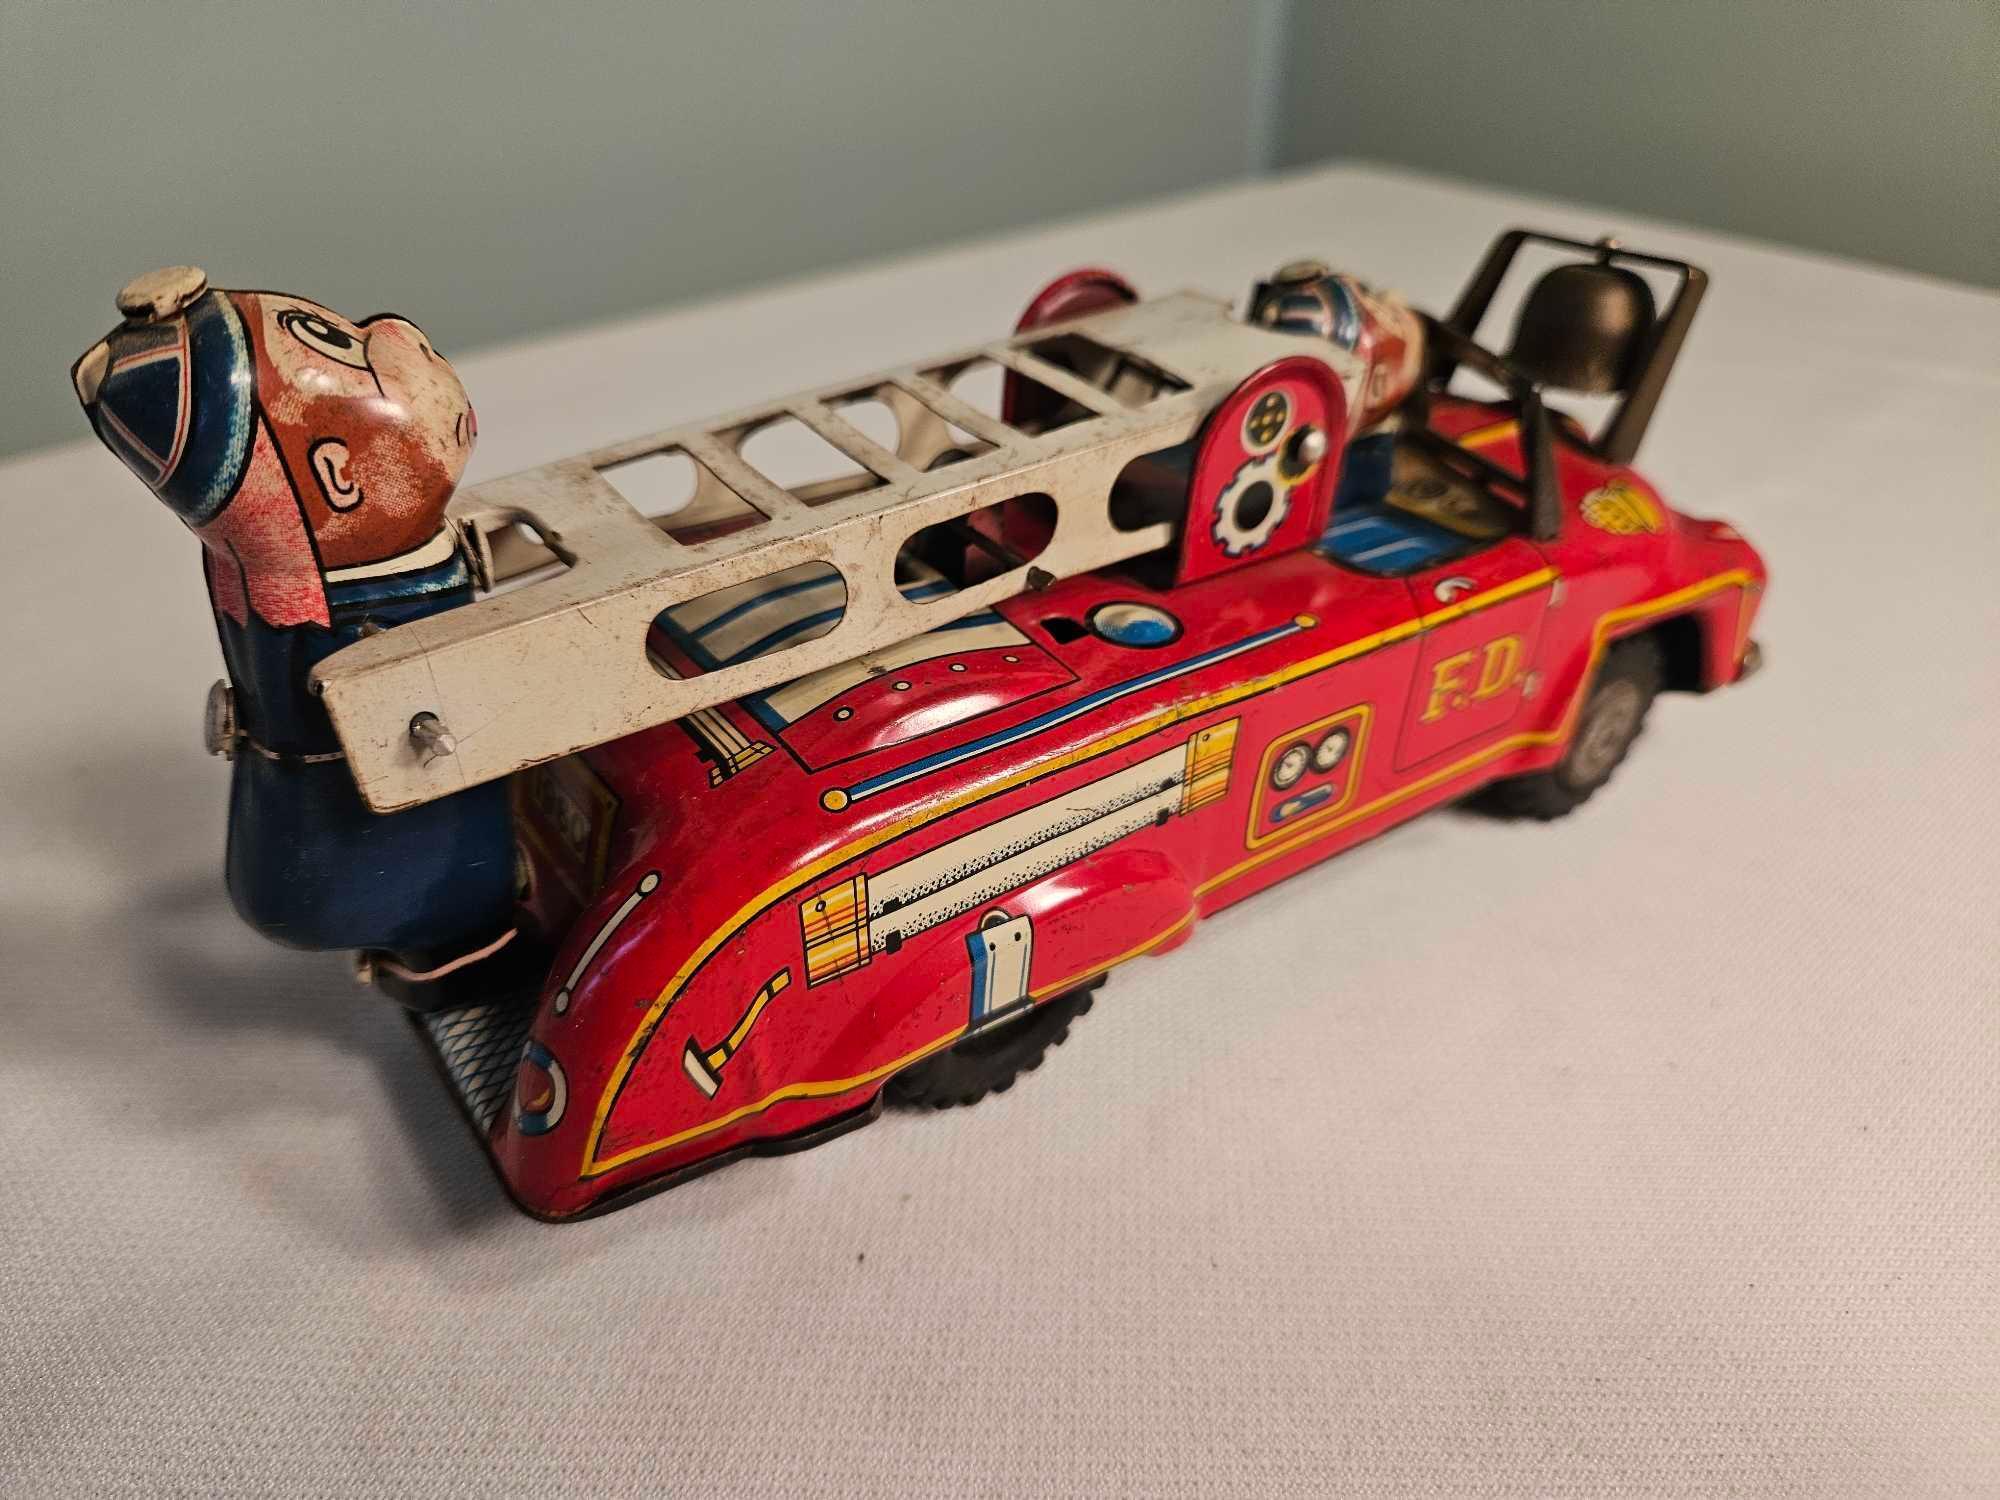 Vintage Tin Litho Mechanical Fire Truck - Japan